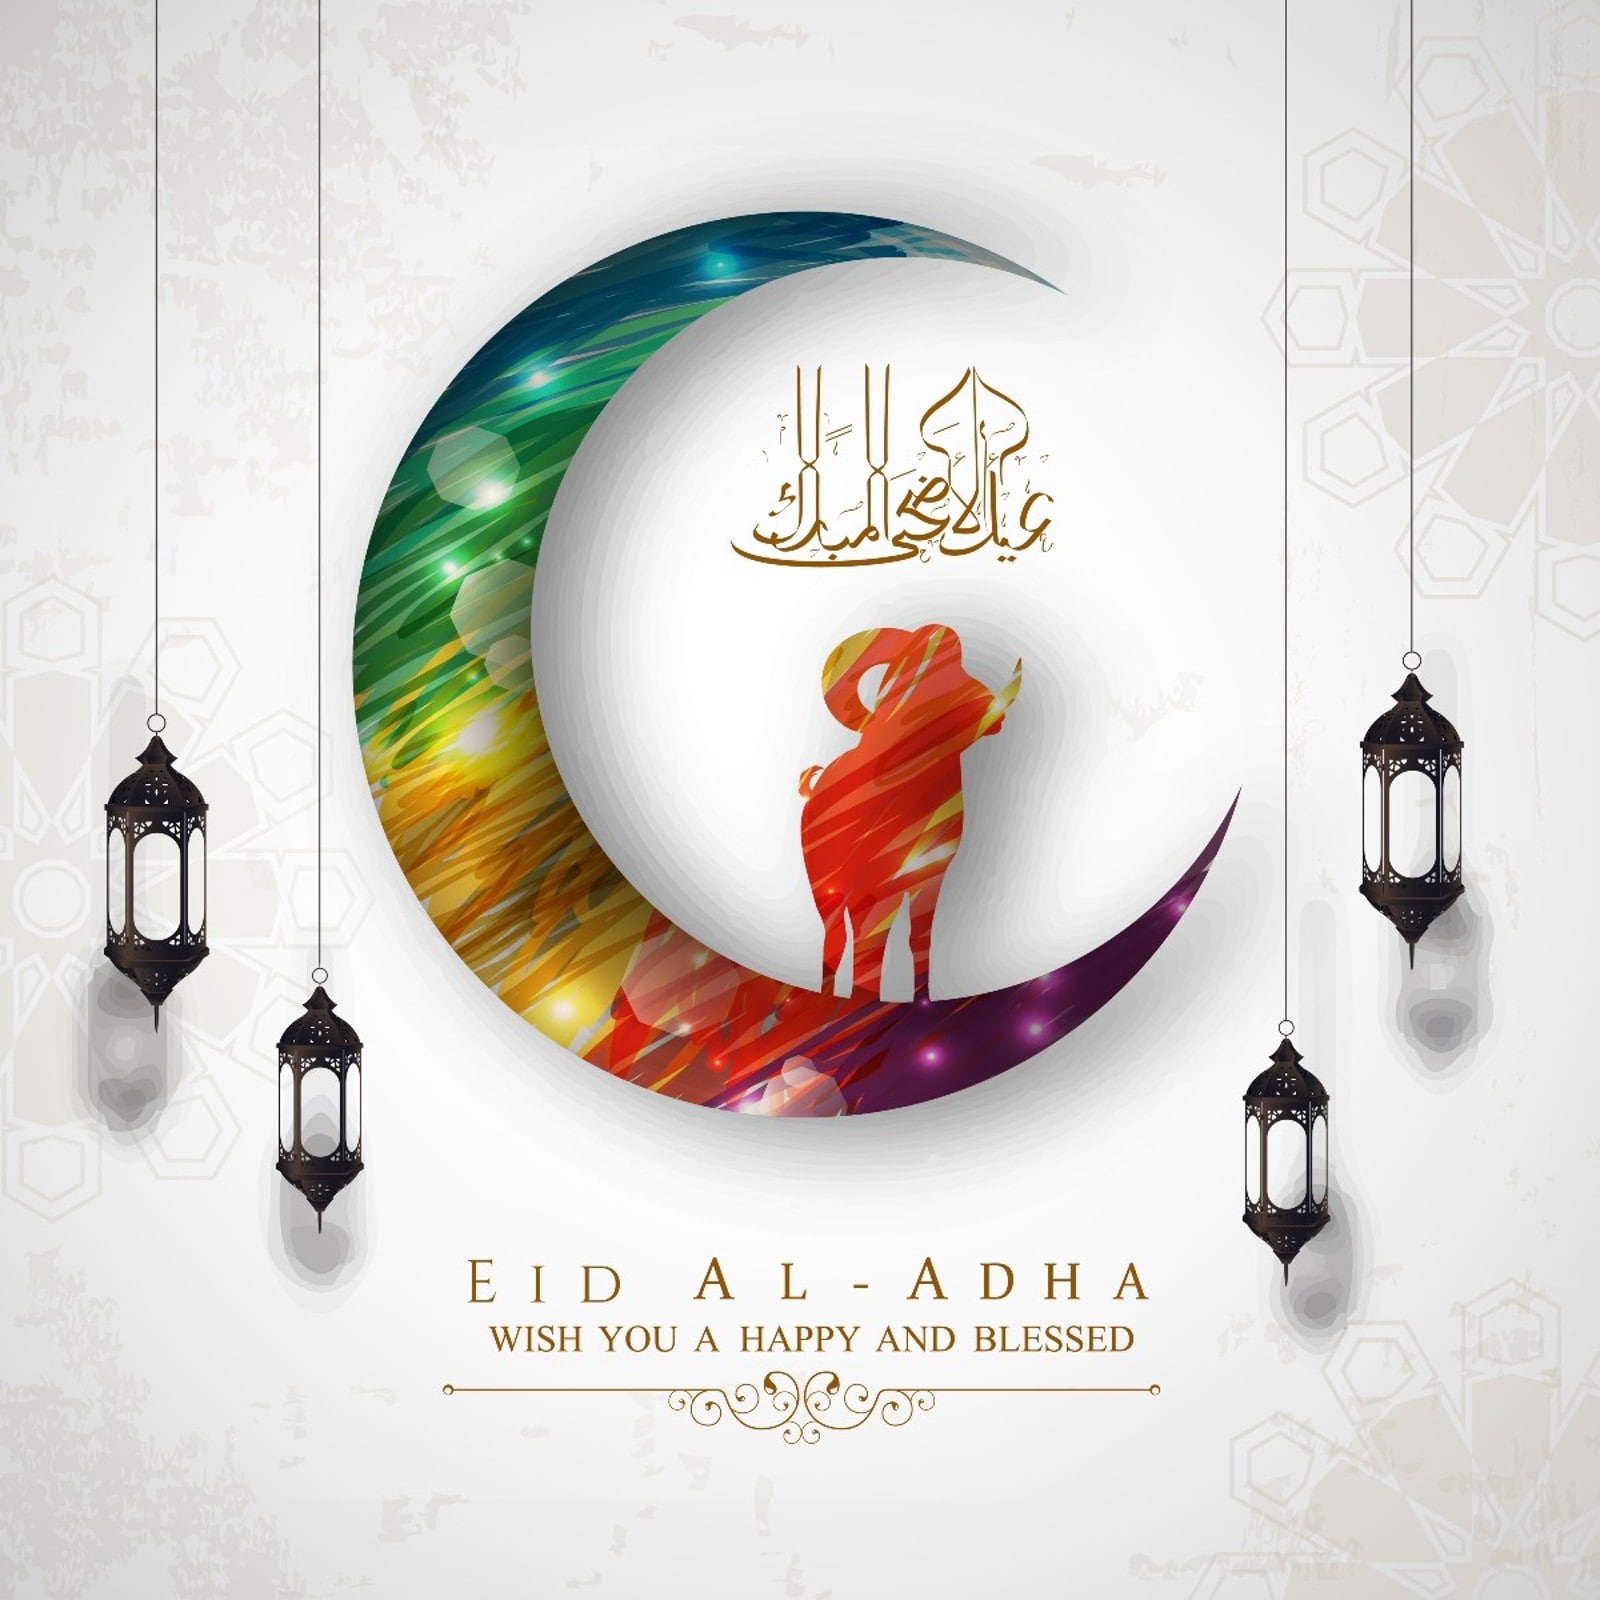 Eid alAdha Moon Sighting in Saudi Arabia, India and Other Countries